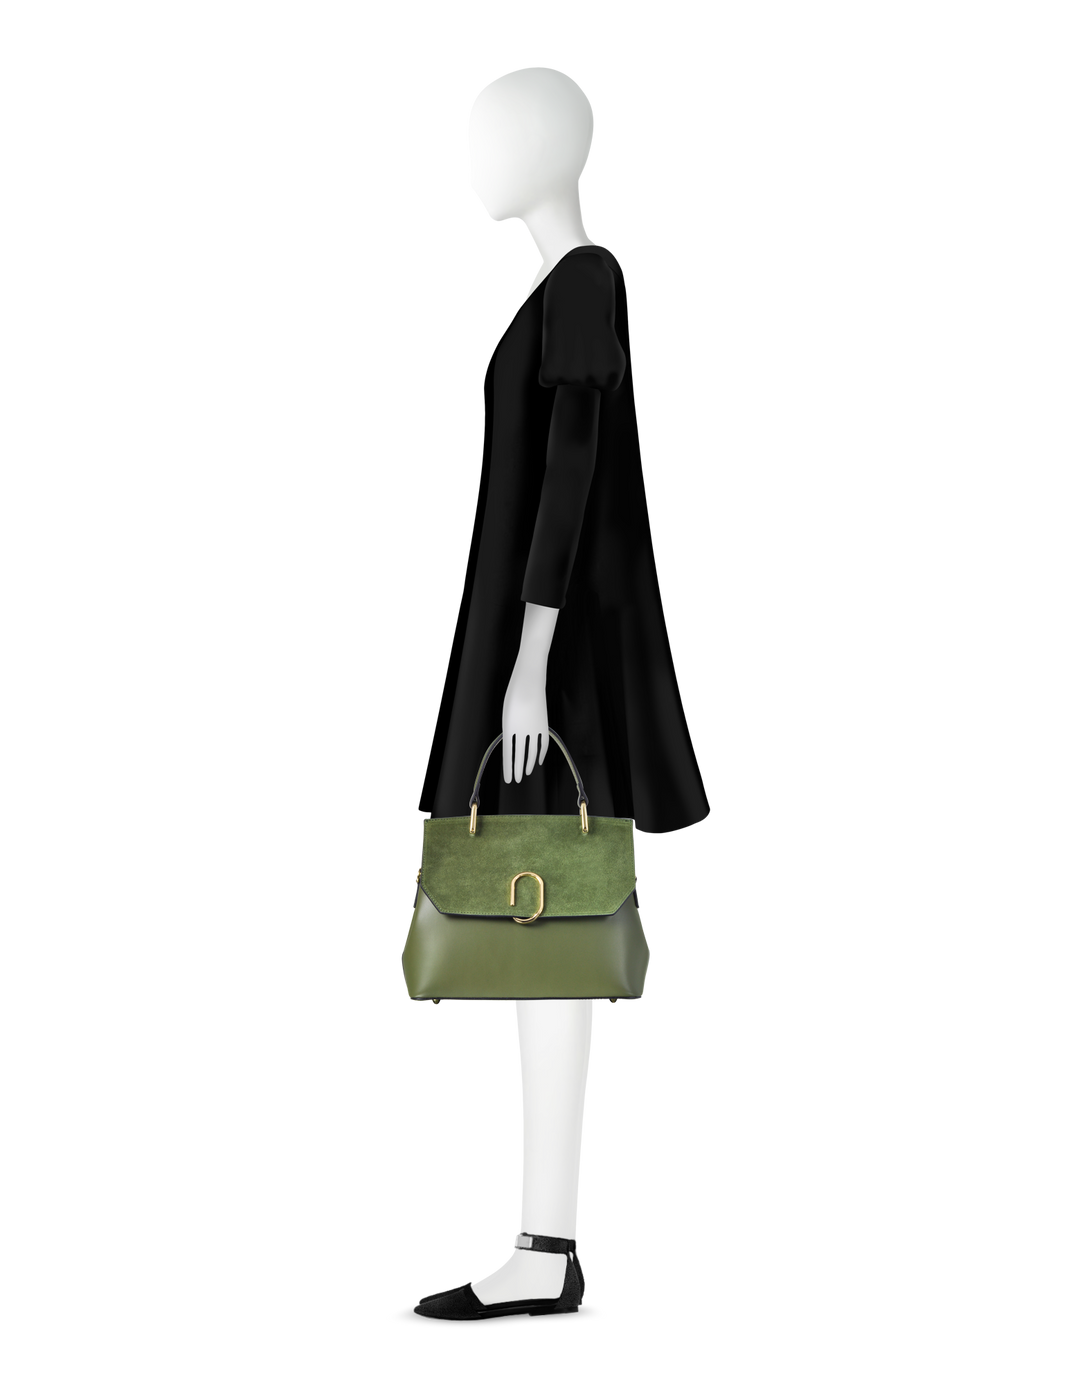 Side view of mannequin in black dress holding green handbag